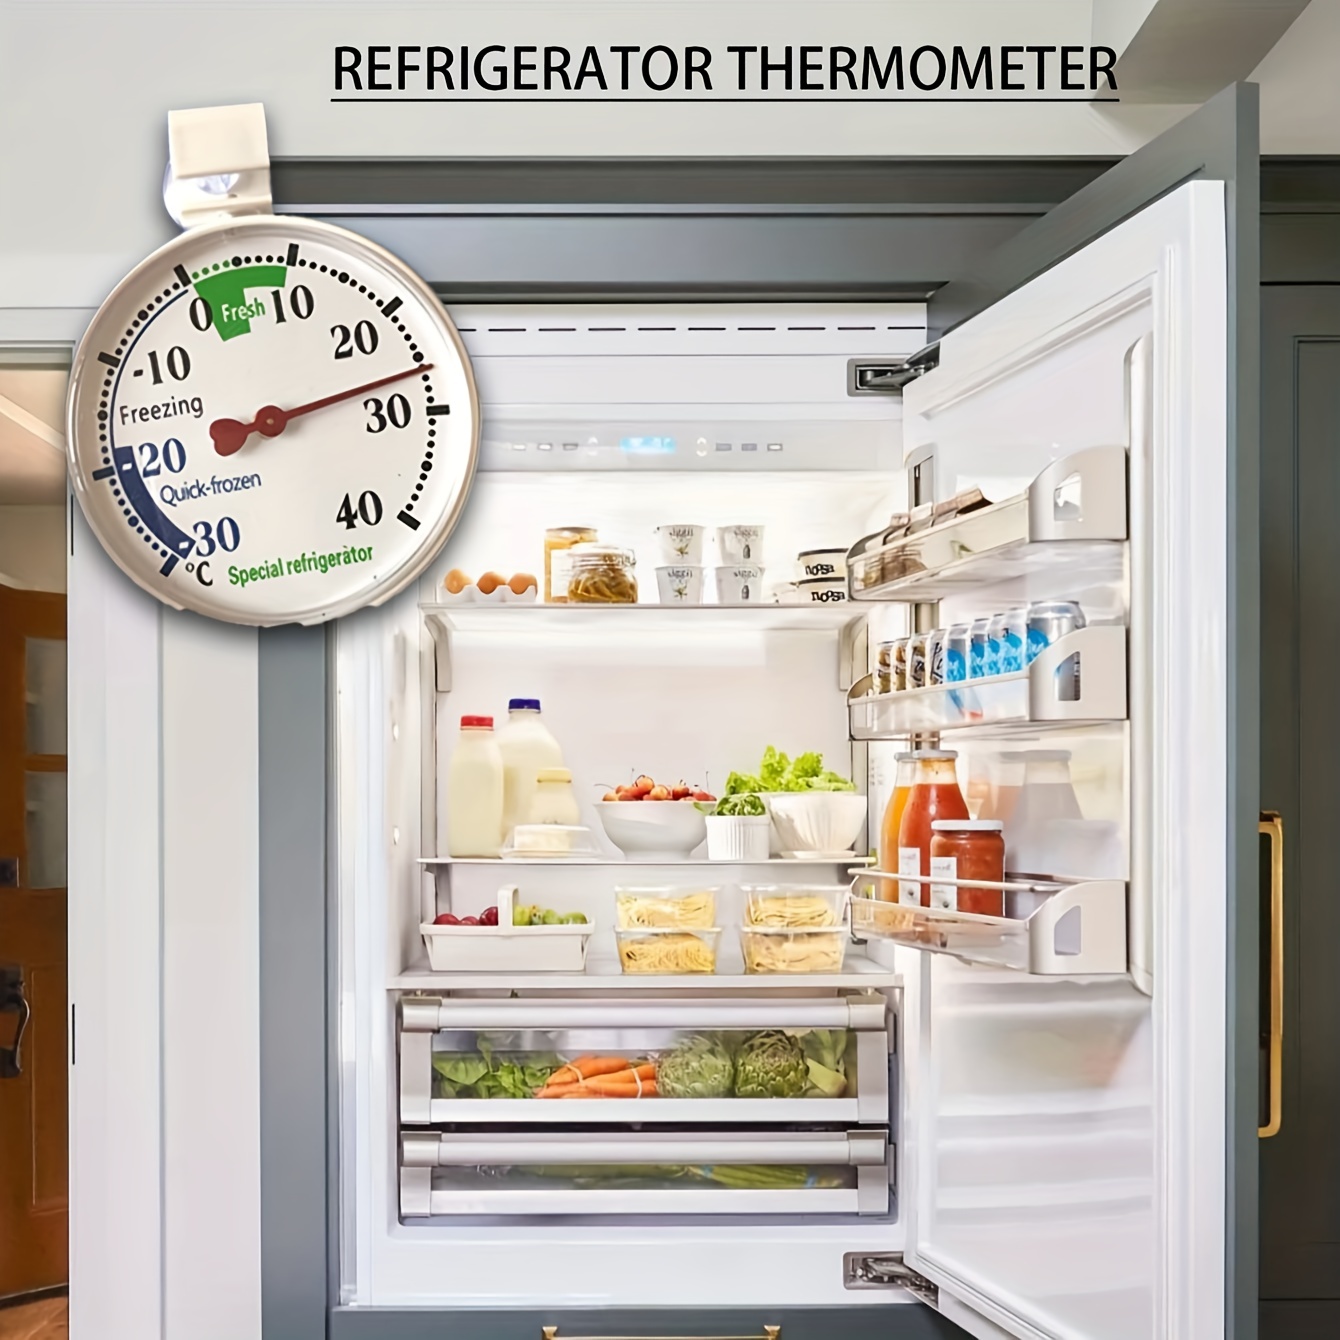 Refrigerator-Freezer Thermometer 2.5 dial display